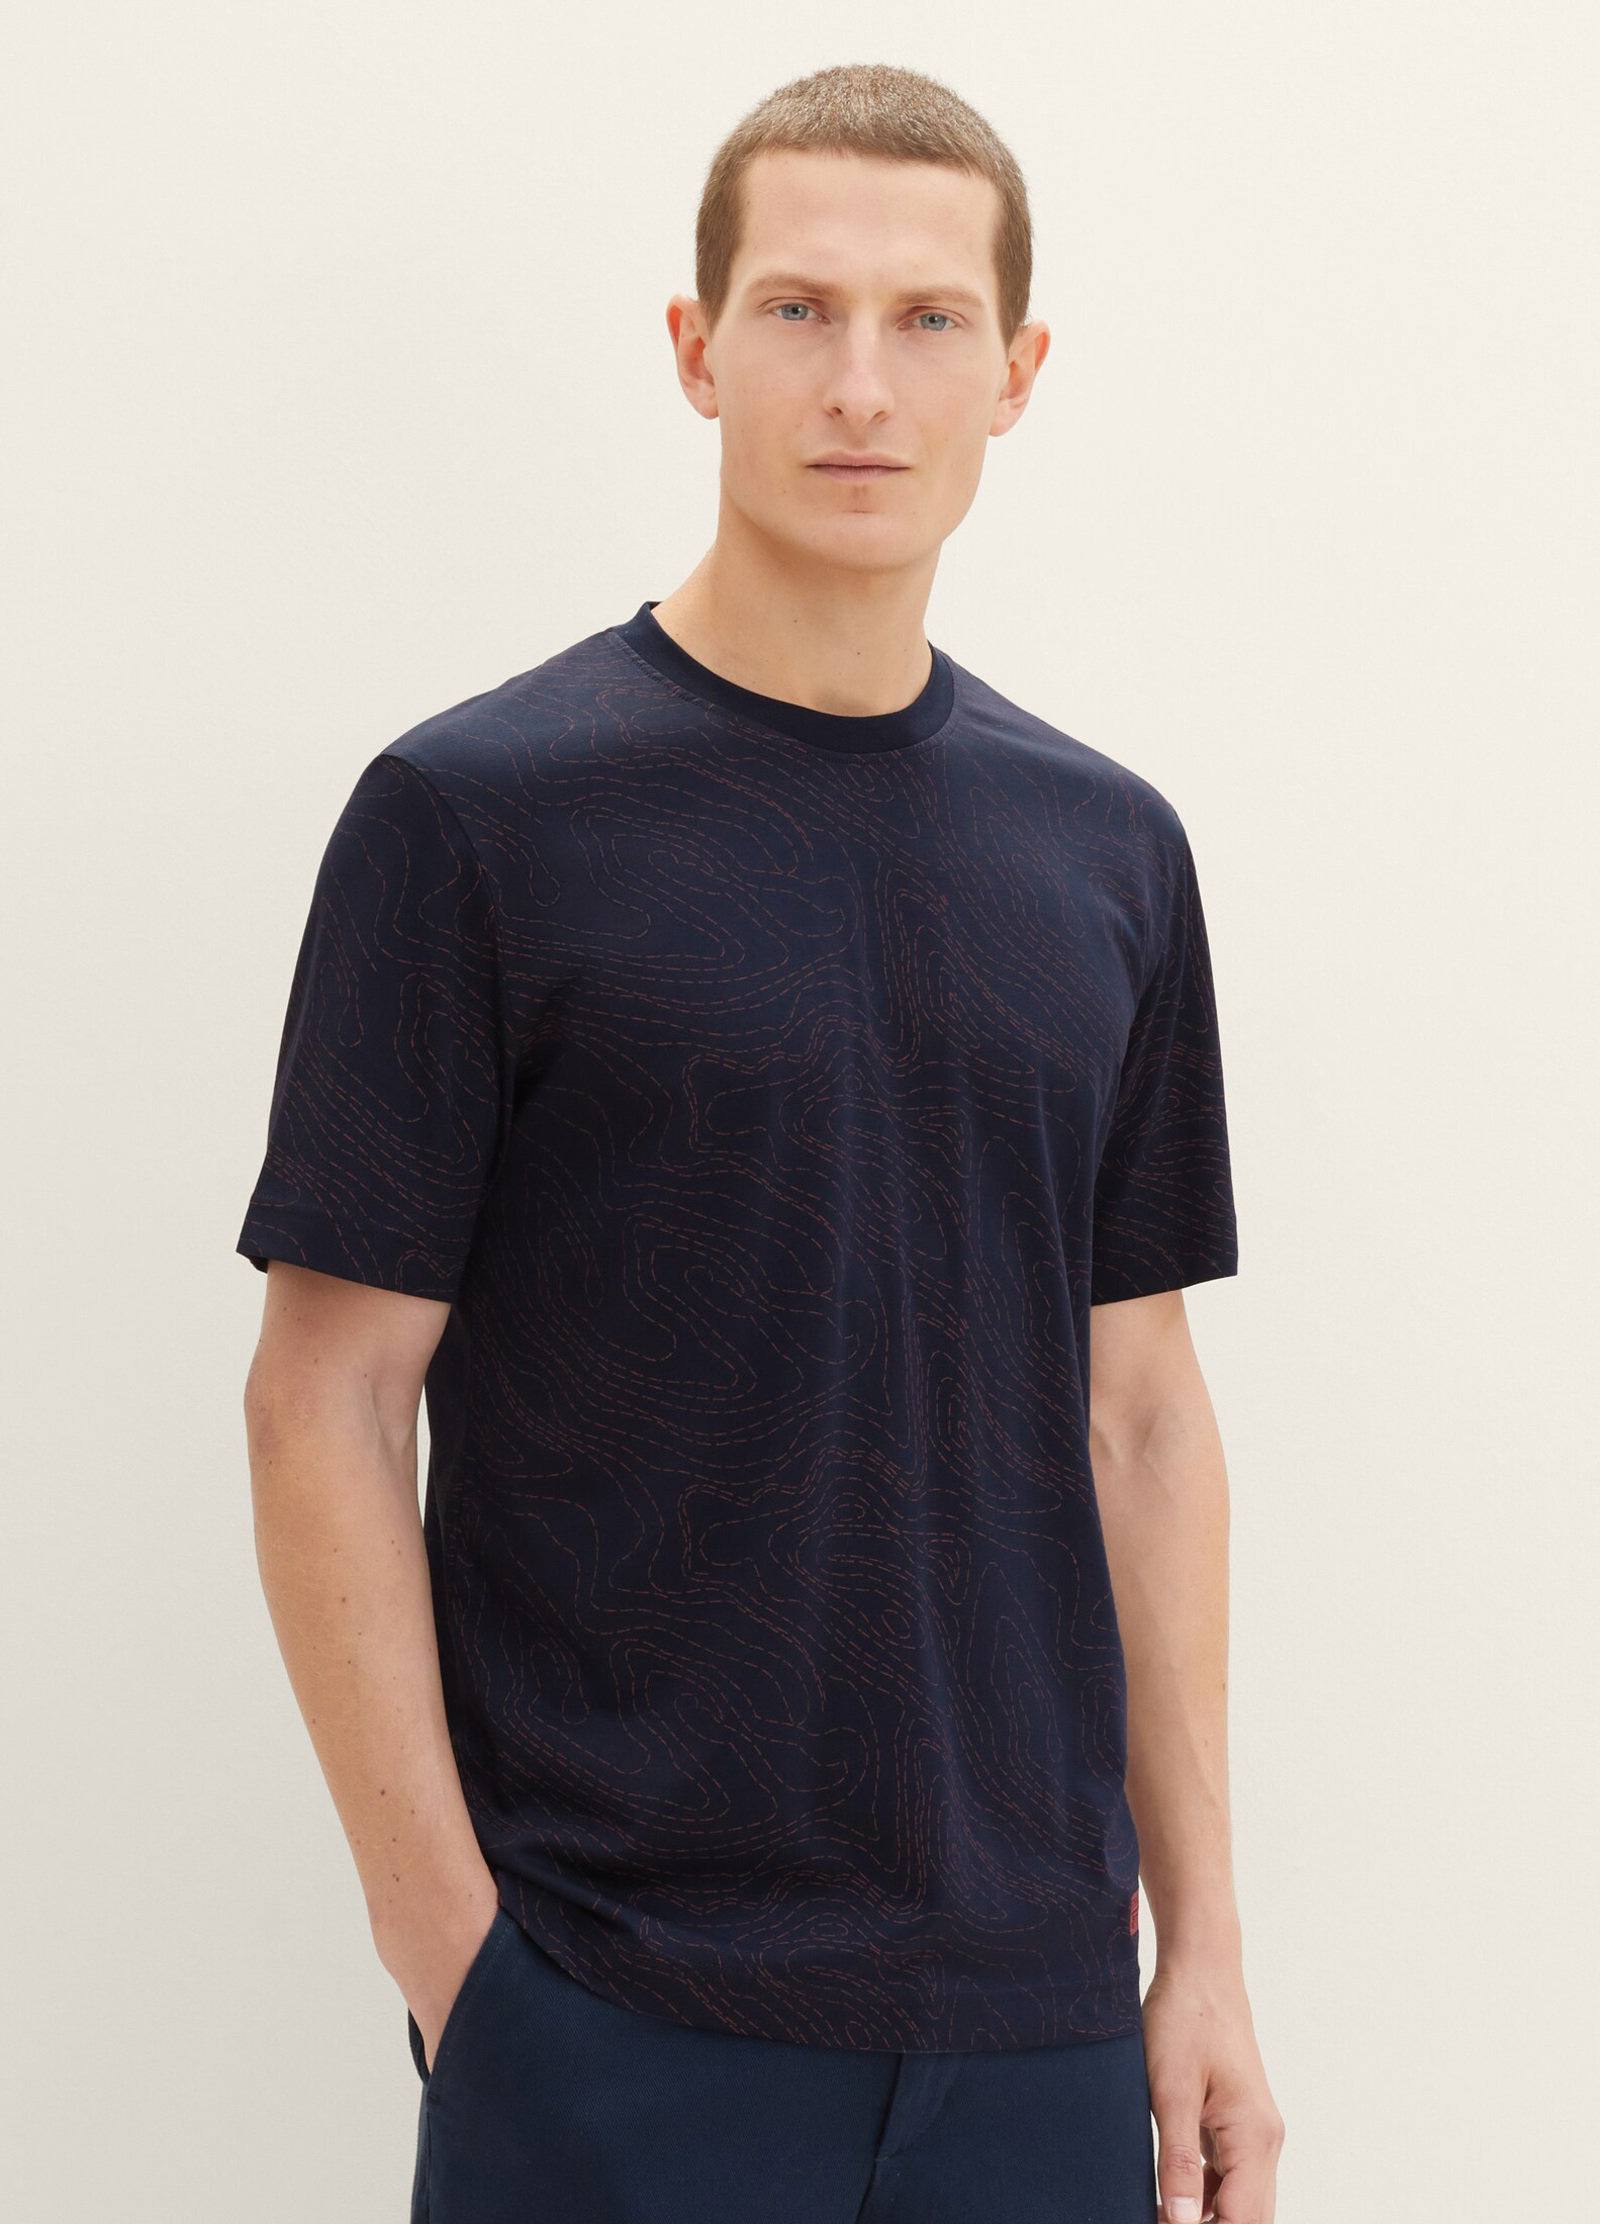 Preisermäßigung Tom Tailor® Patterned Line - Sky Rozmiar Blue T-shirt Captain M Design